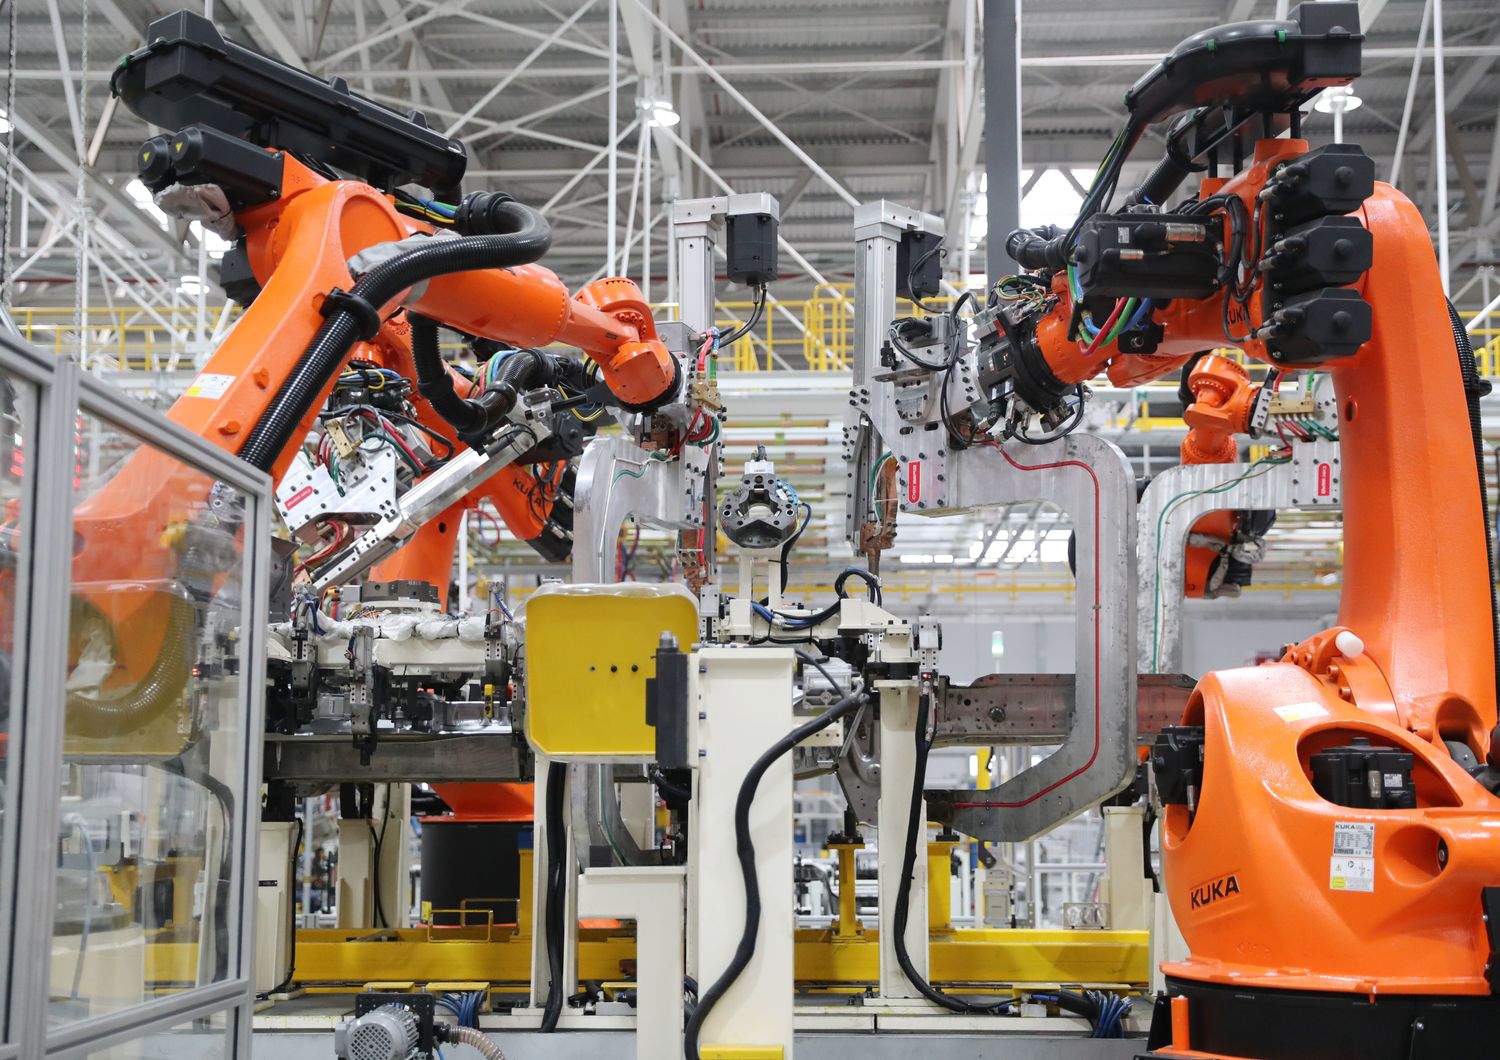 L'intelligenza artificiale applicata ai robot in fabbrica